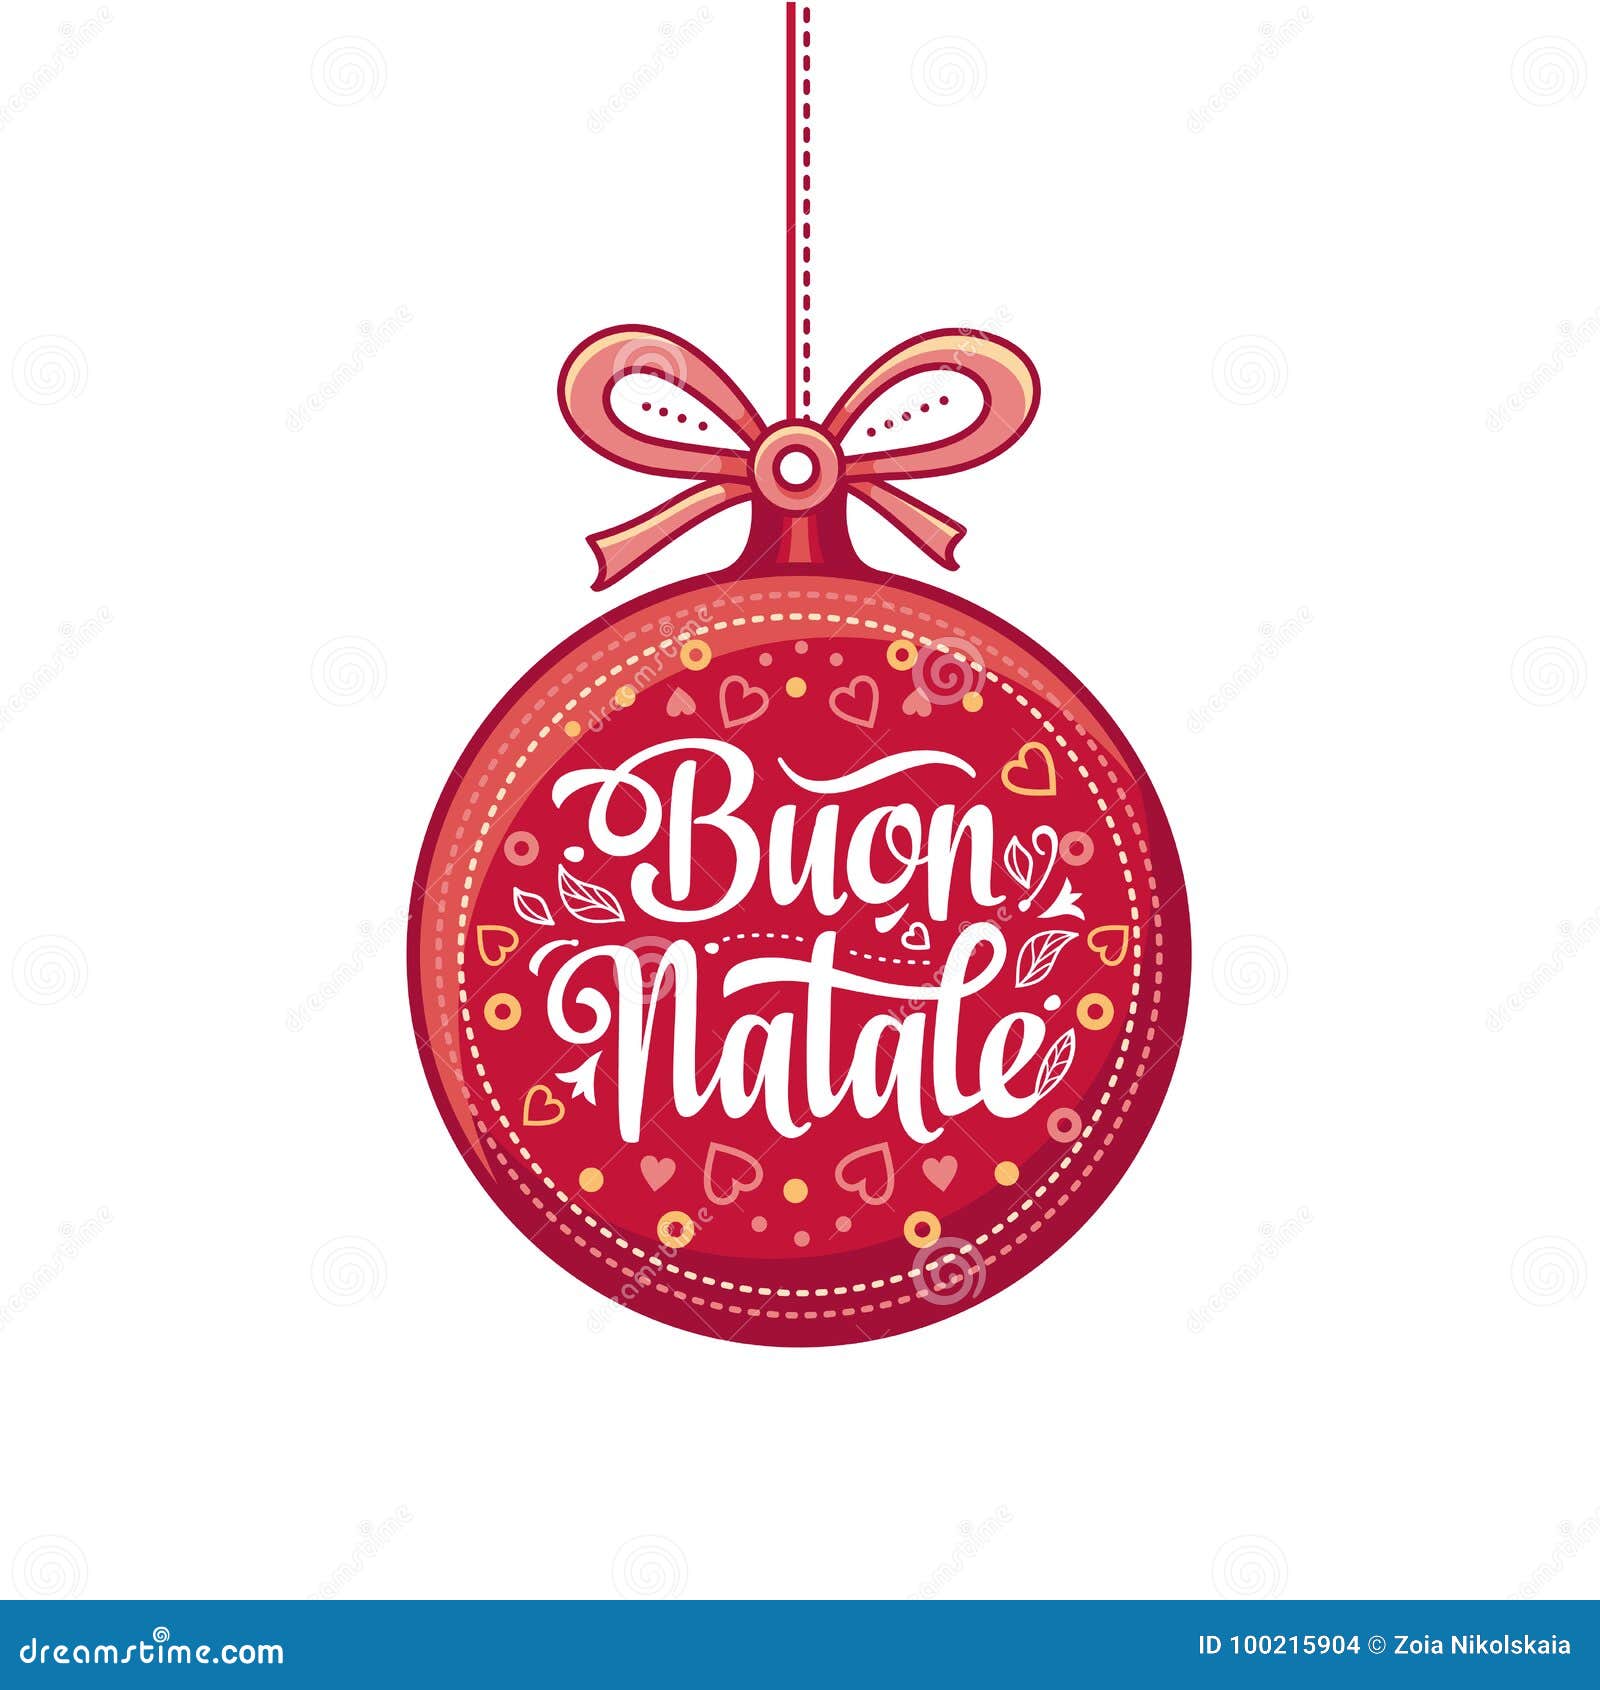 Buon Natale Vettoriale.Buon Natale Christmas Template Stock Vector Illustration Of Congratulation Card 100215904